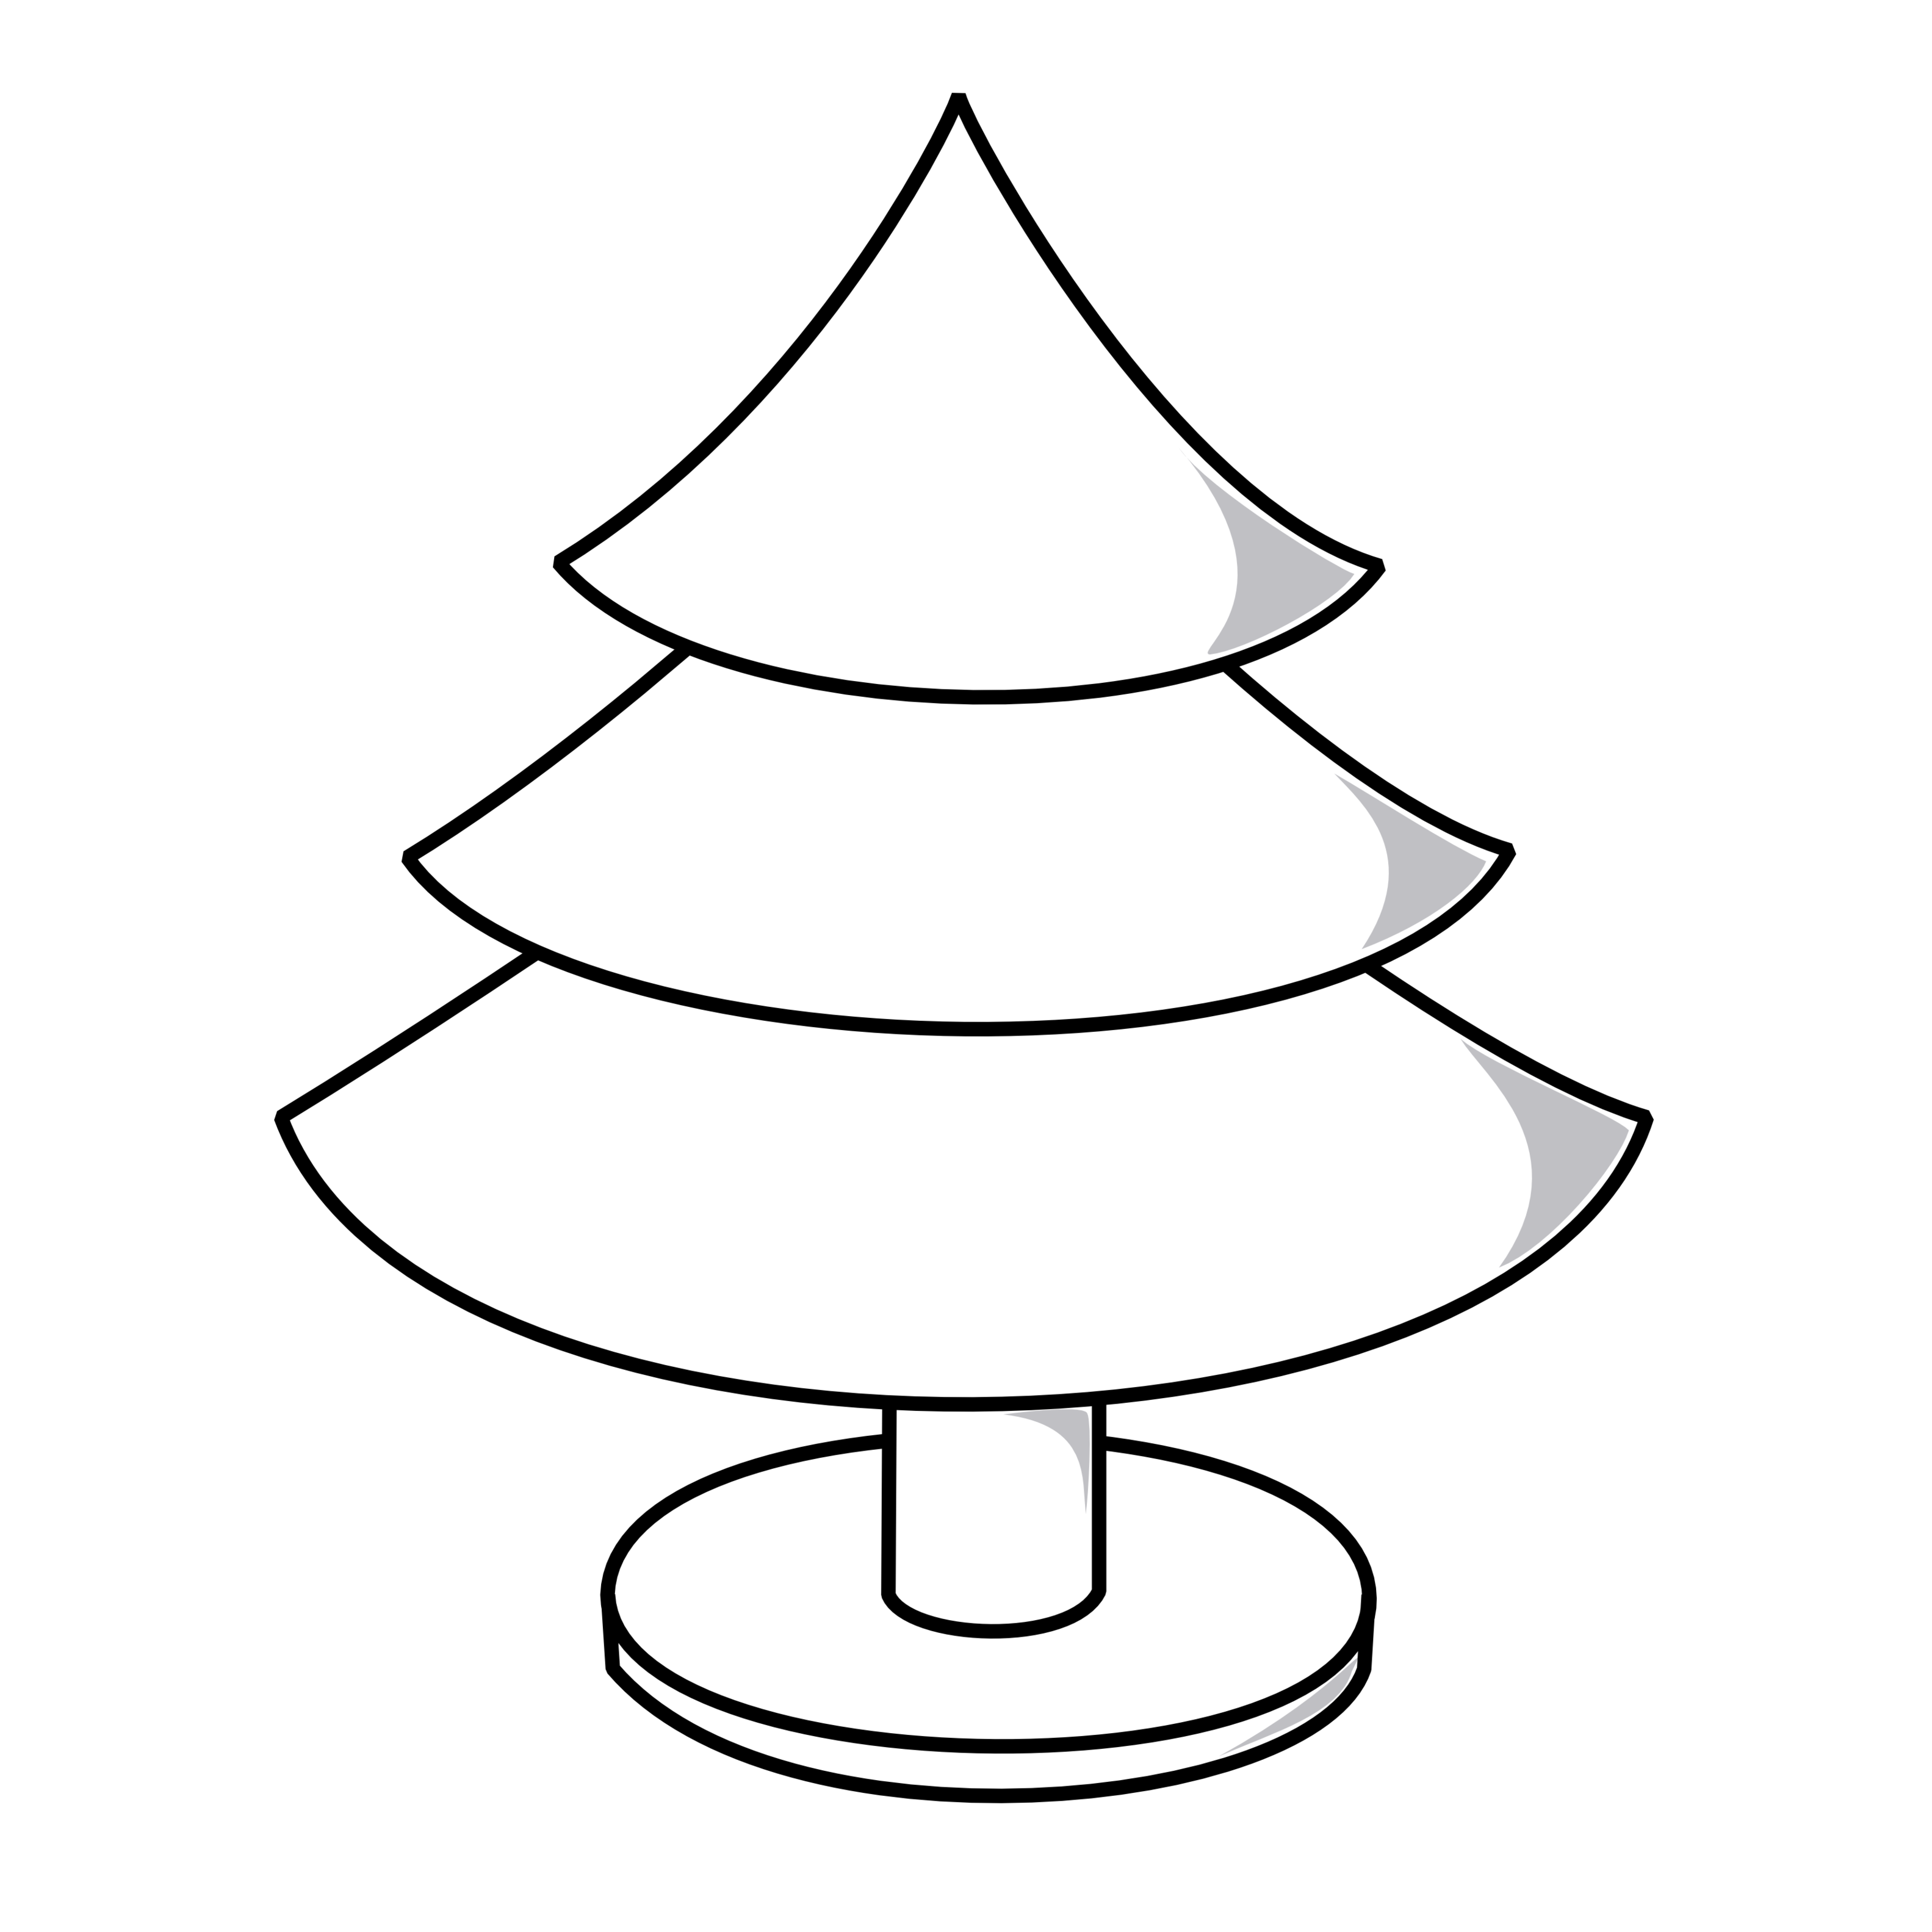 Plain christmas tree black and white clipart - ClipartFox